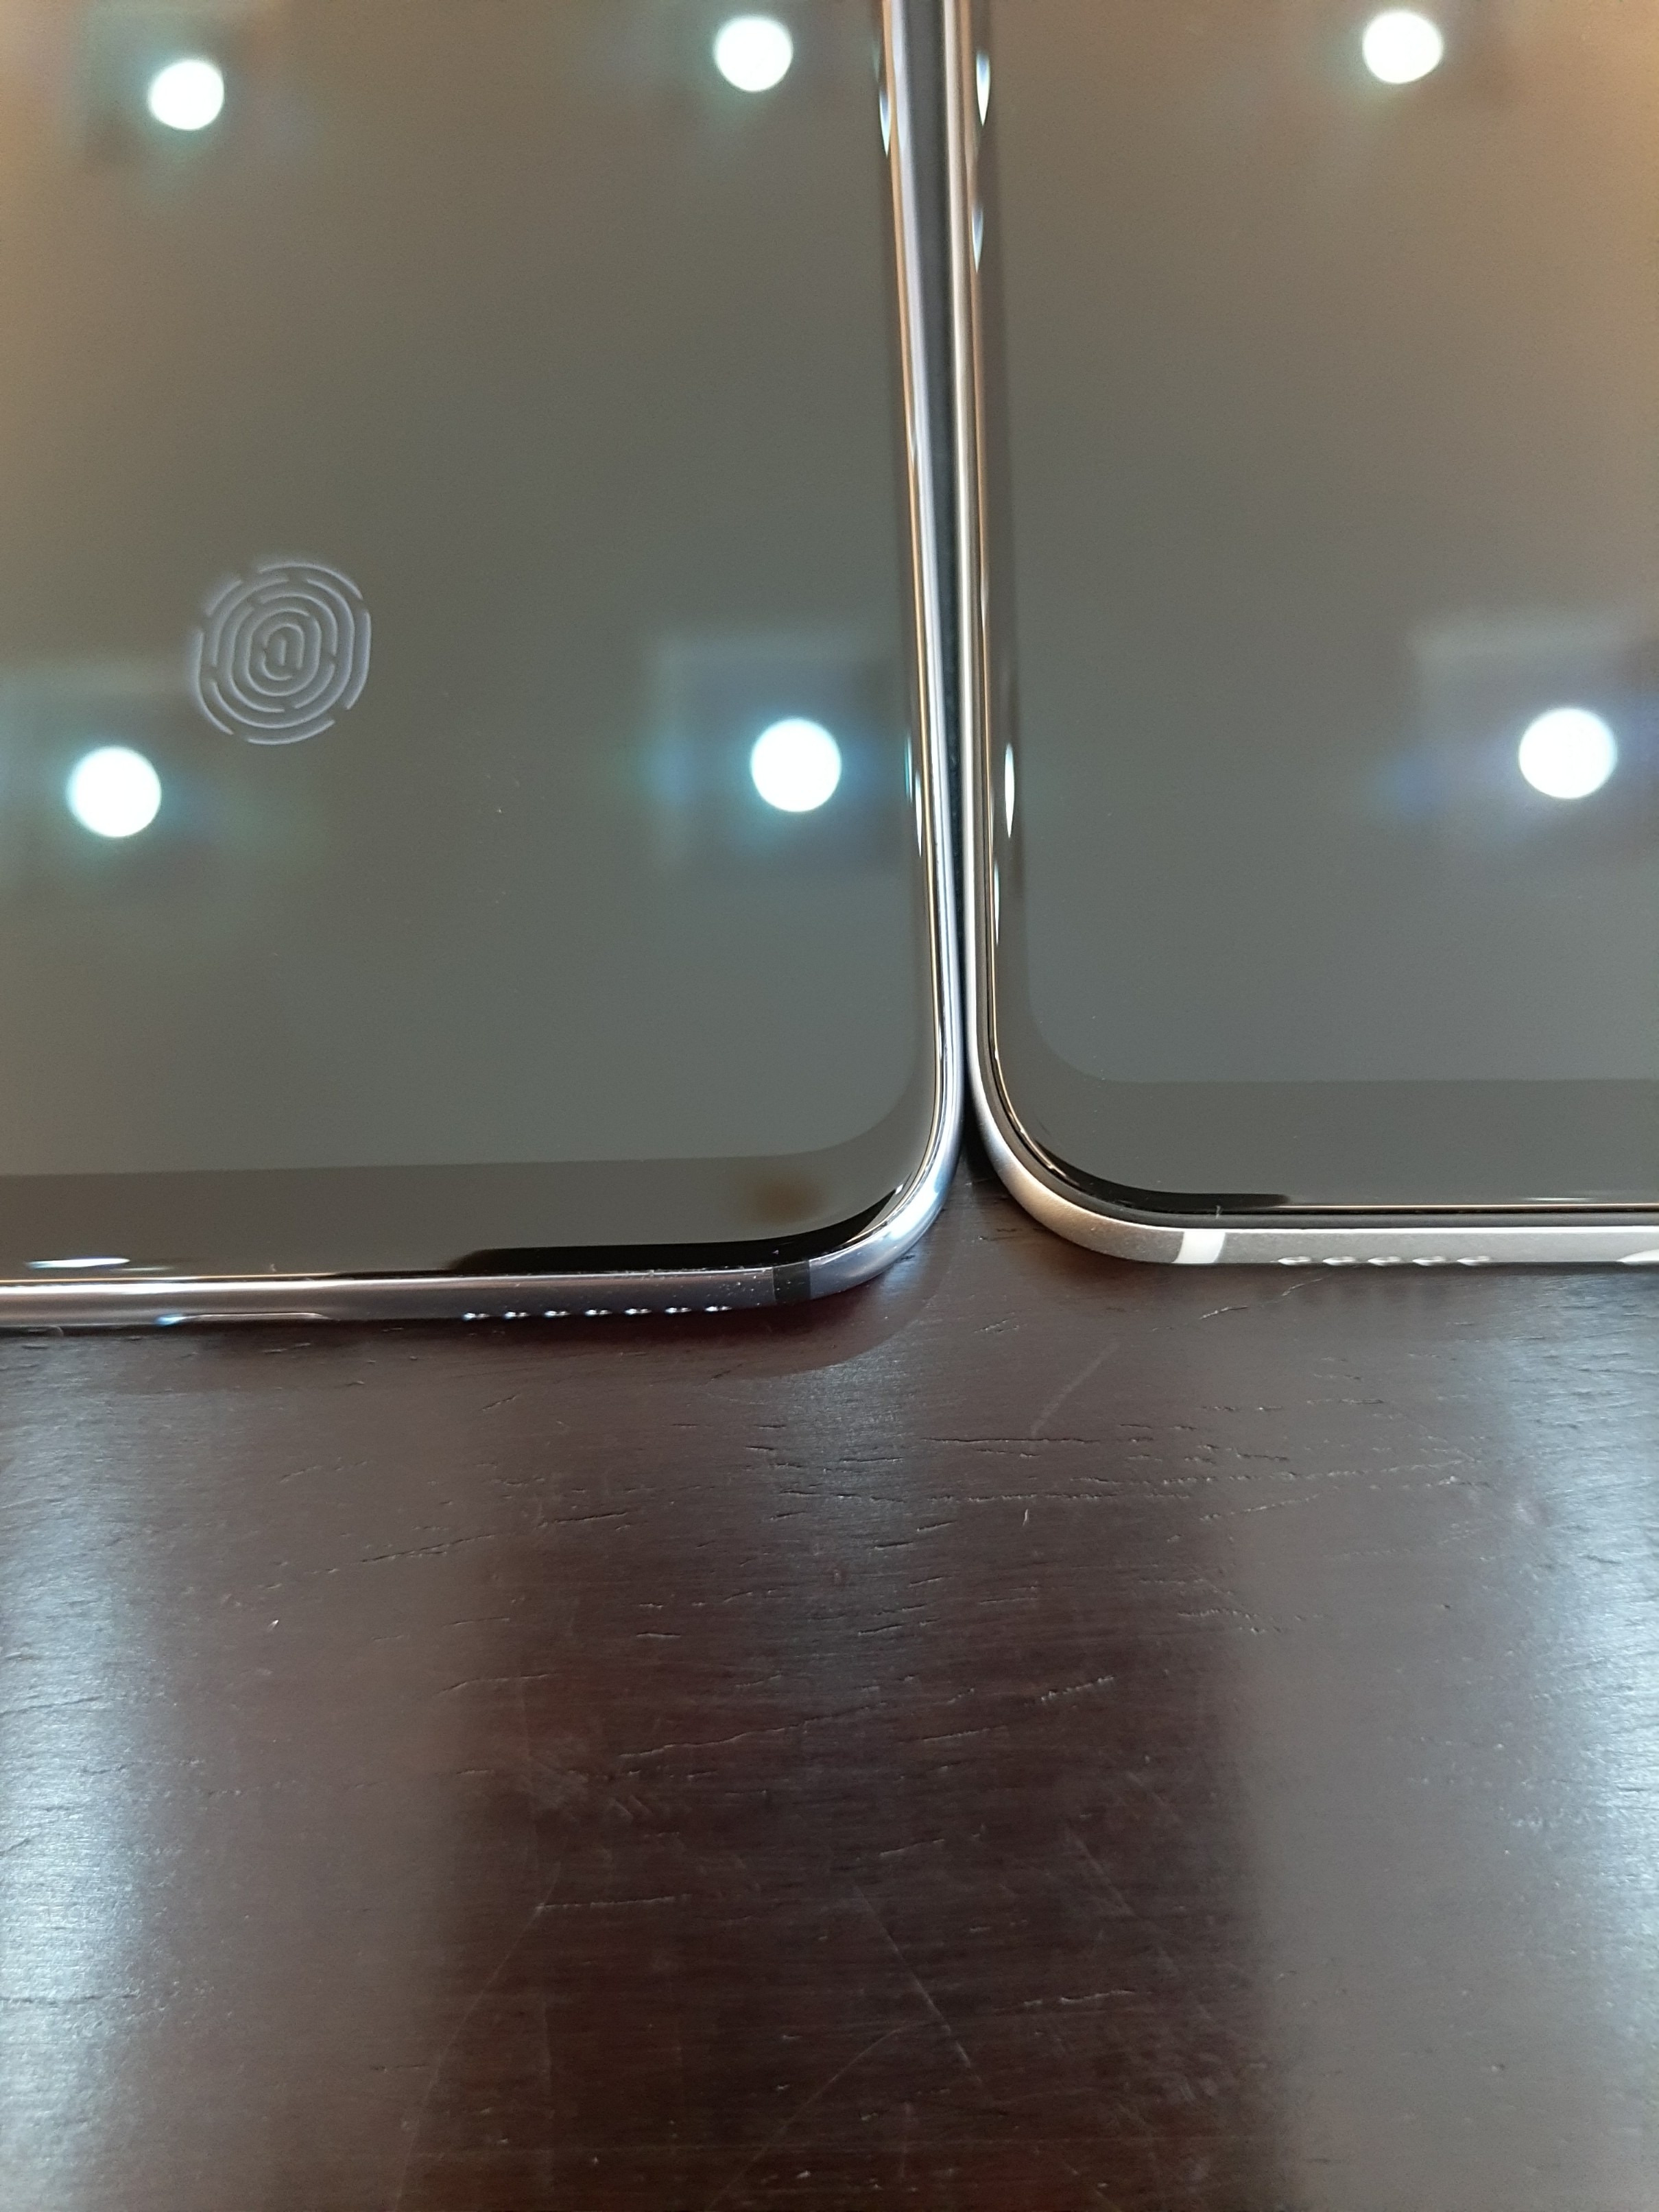 Meizu 16 Leak In-screen fingerprint scanner AndroidHits